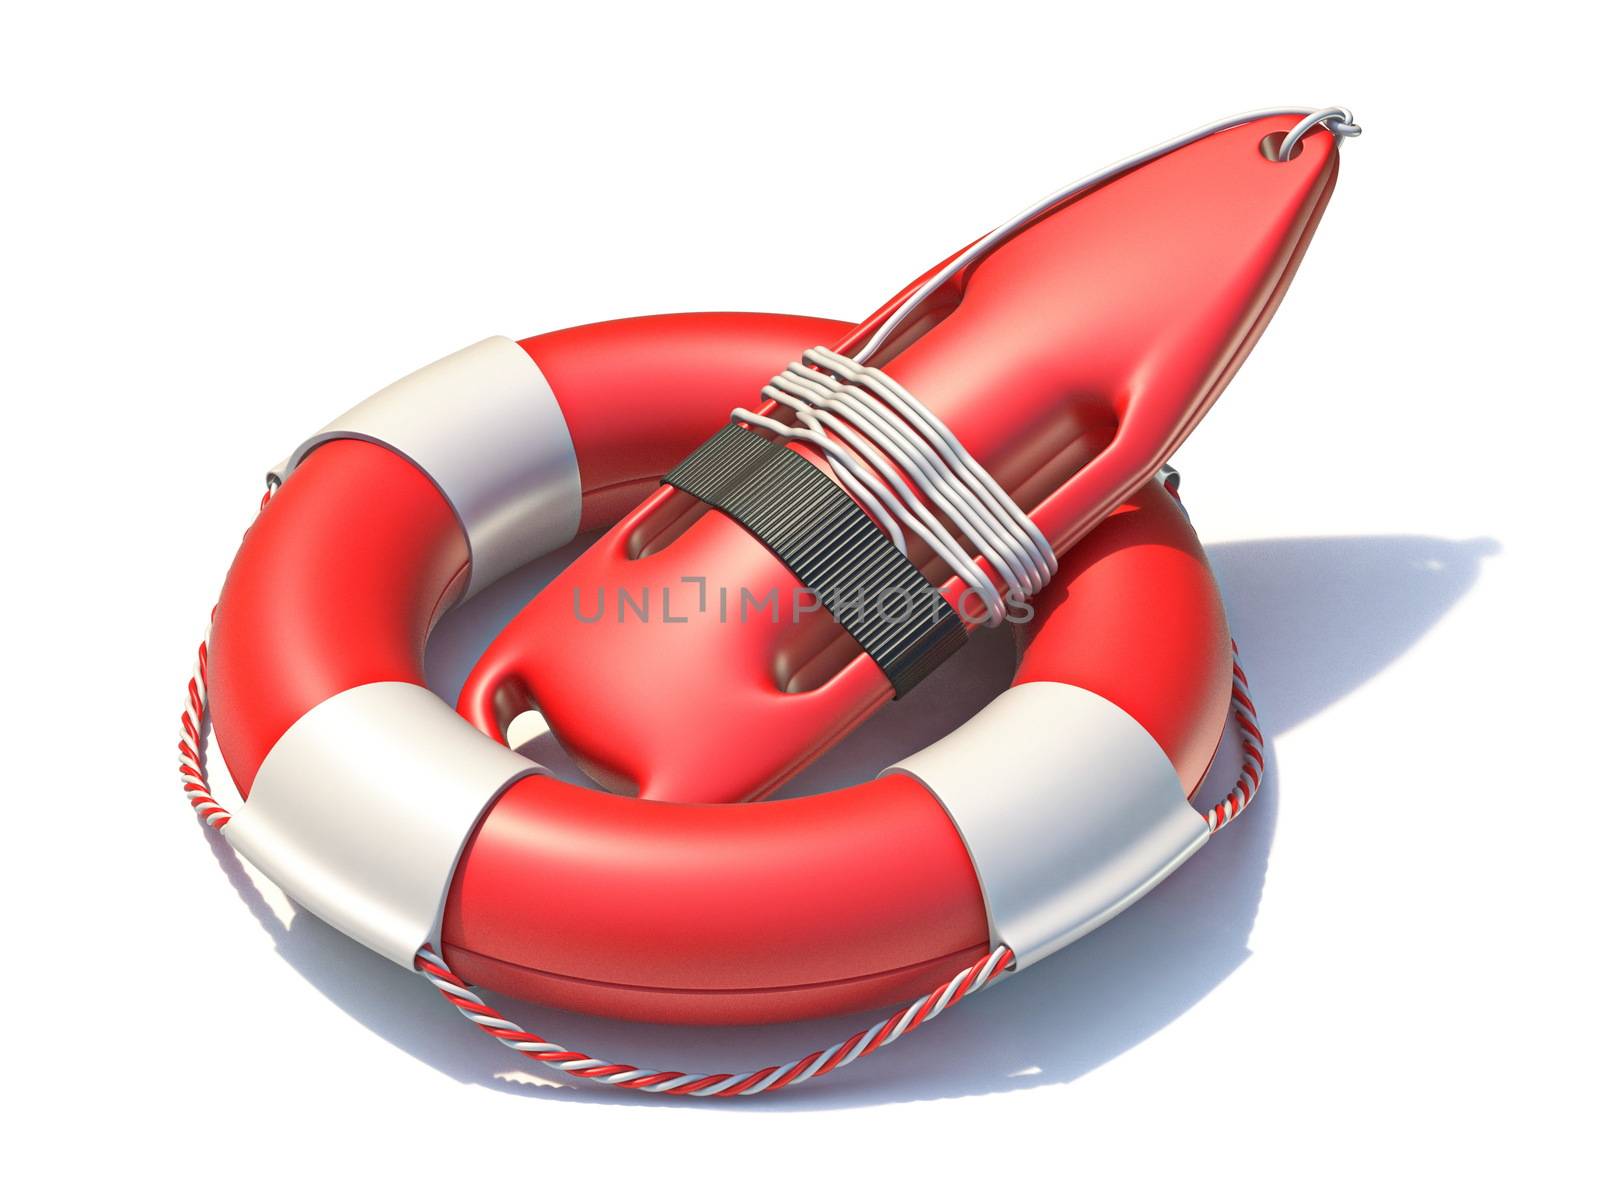 Lifeguard professional lifebuoys 3D rendering illustration isolated on white background